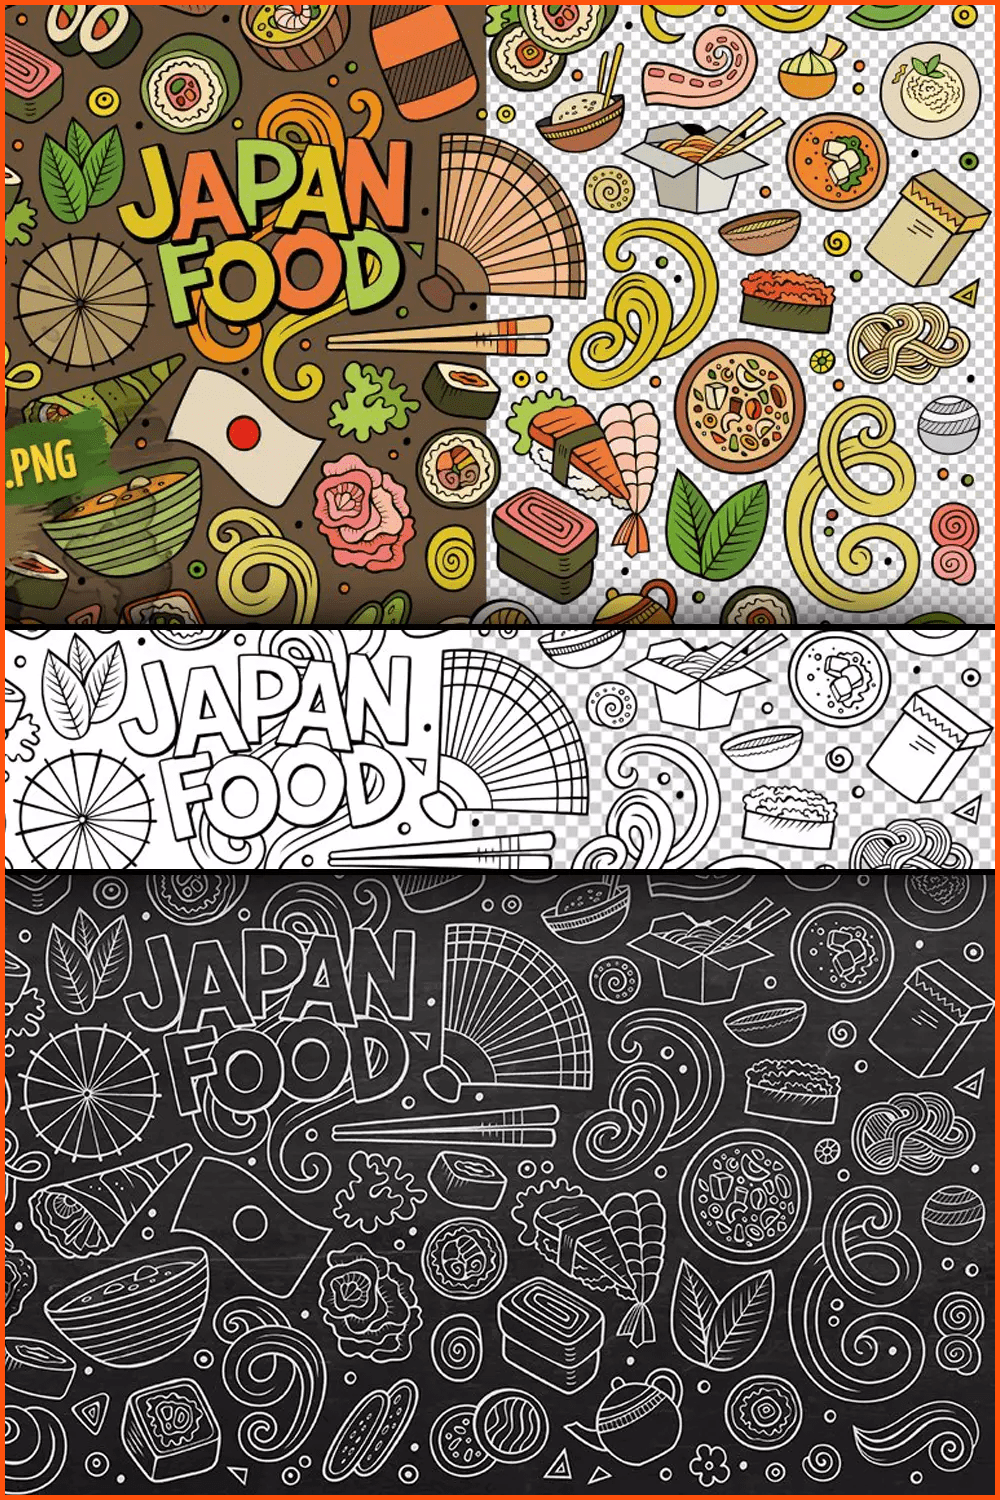 Japan food items, and symbols in vector hand-drawn cartoons.